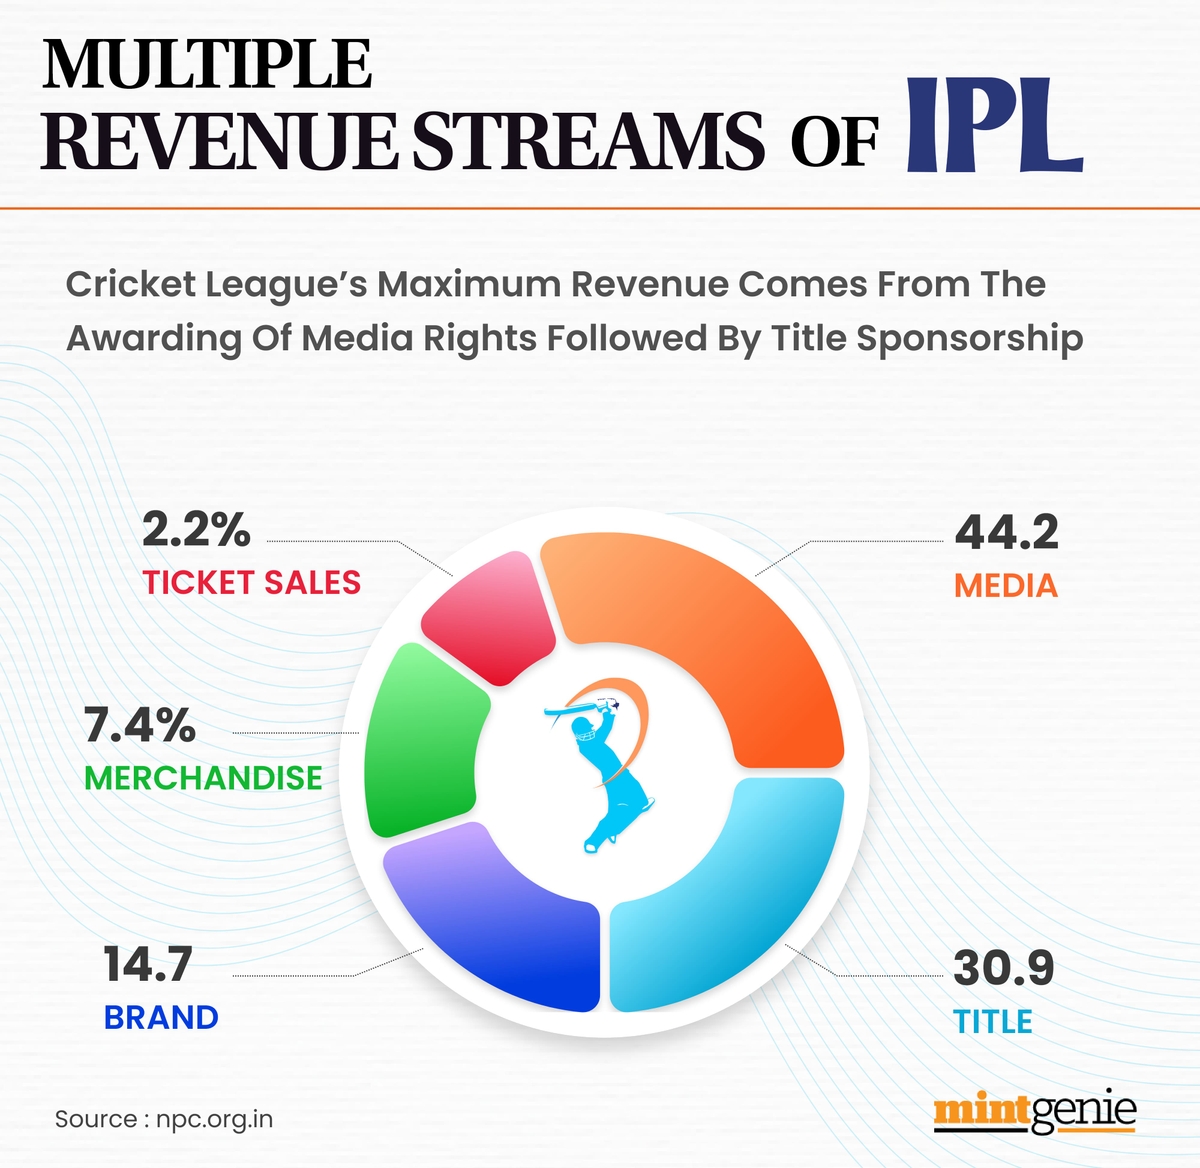 Multiple revenue streams of IPL